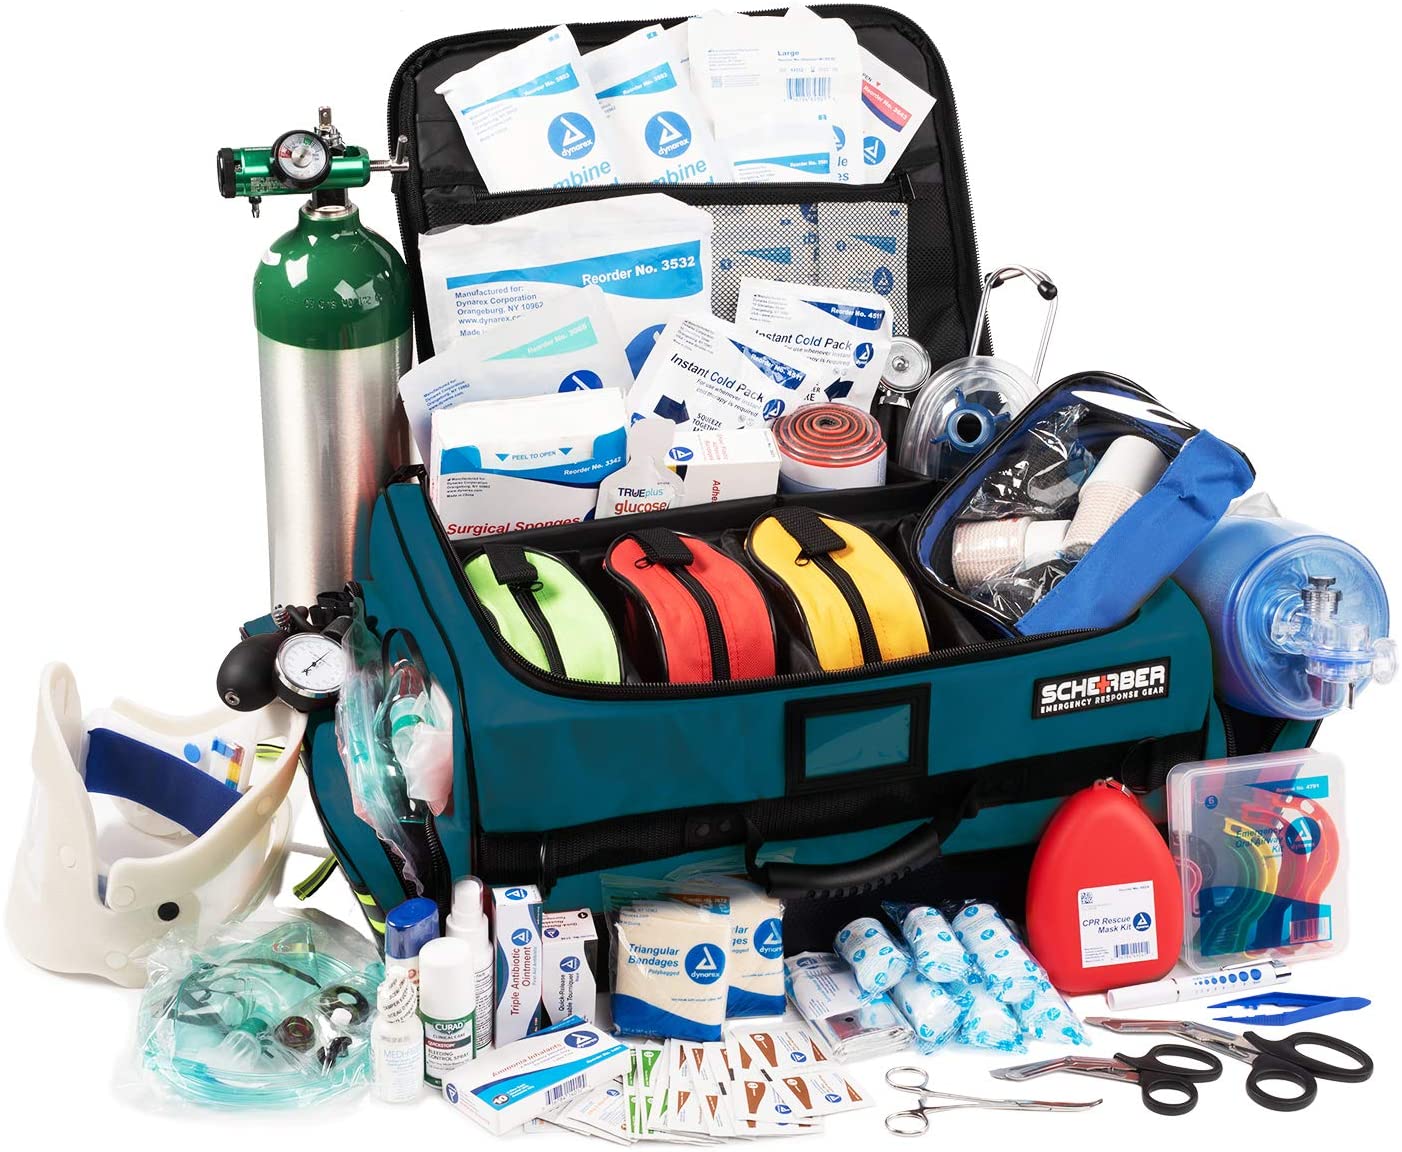 EMI Lister Bandage Scissors - Select Size  First aid kit supplies, First  aid classes, First aid kit contents